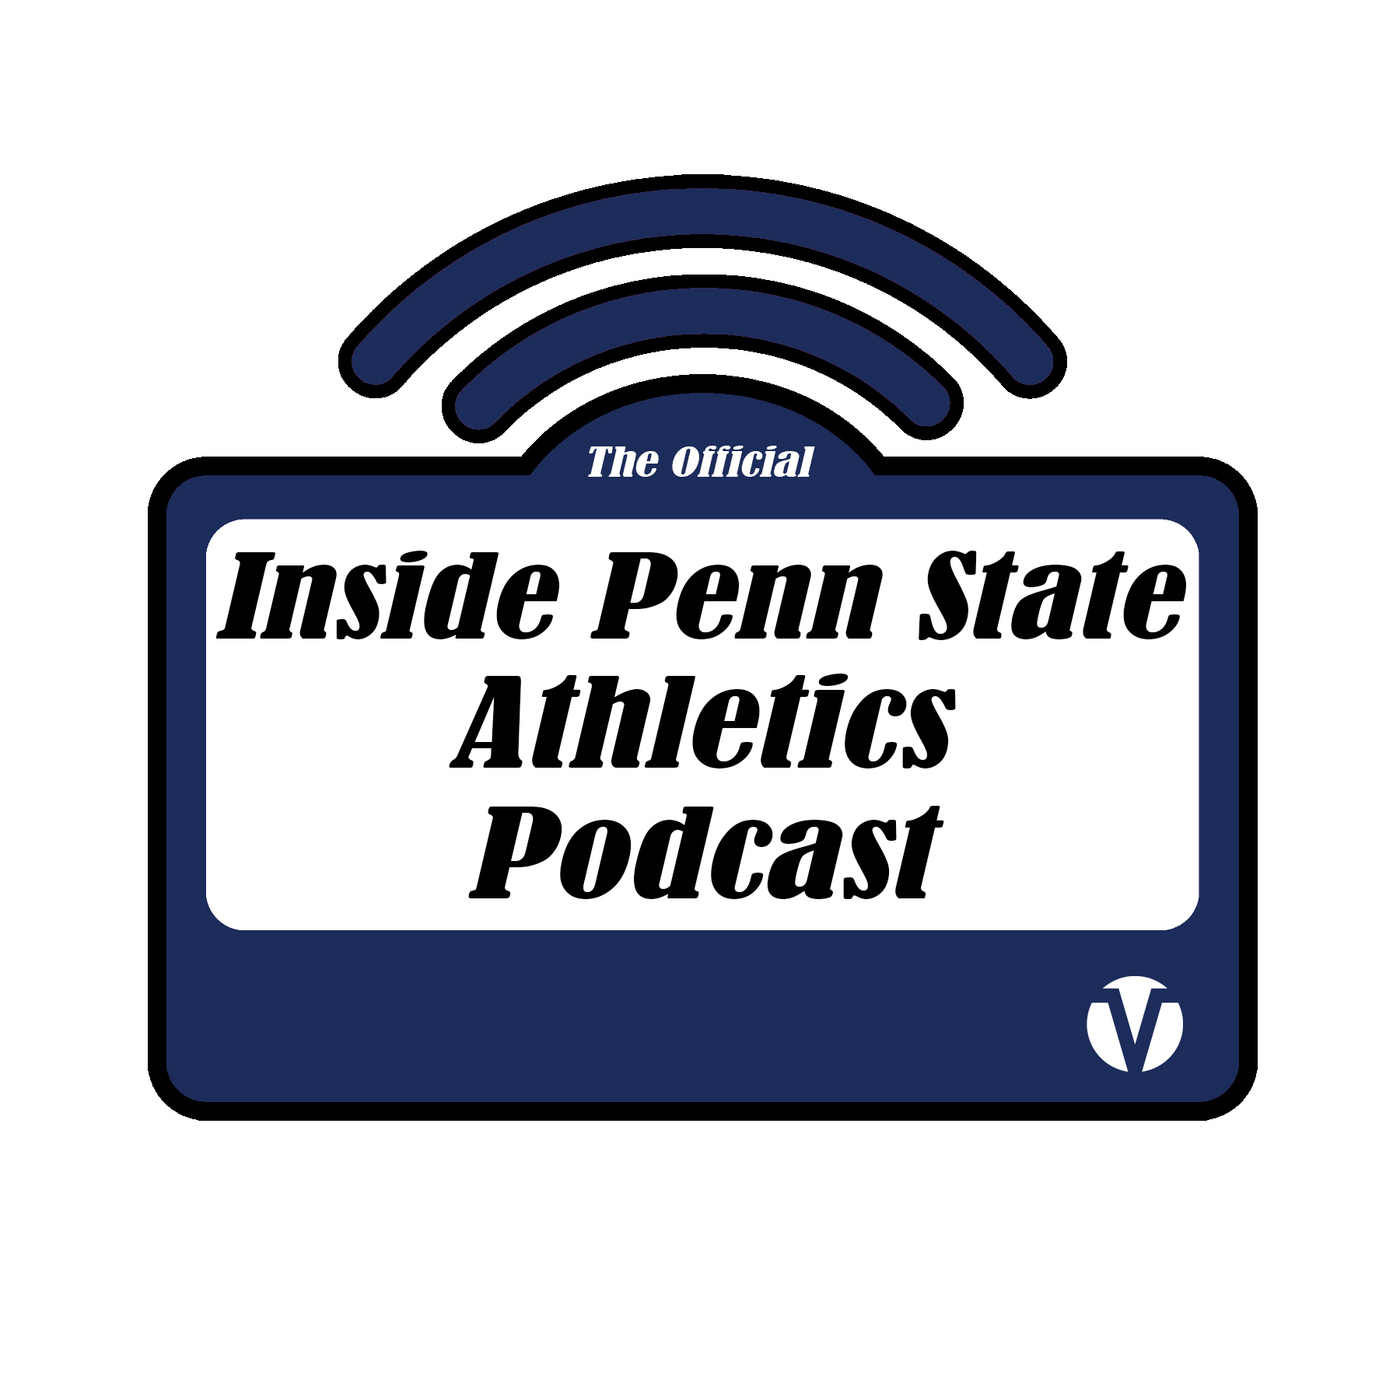 Inside Penn State Athletics